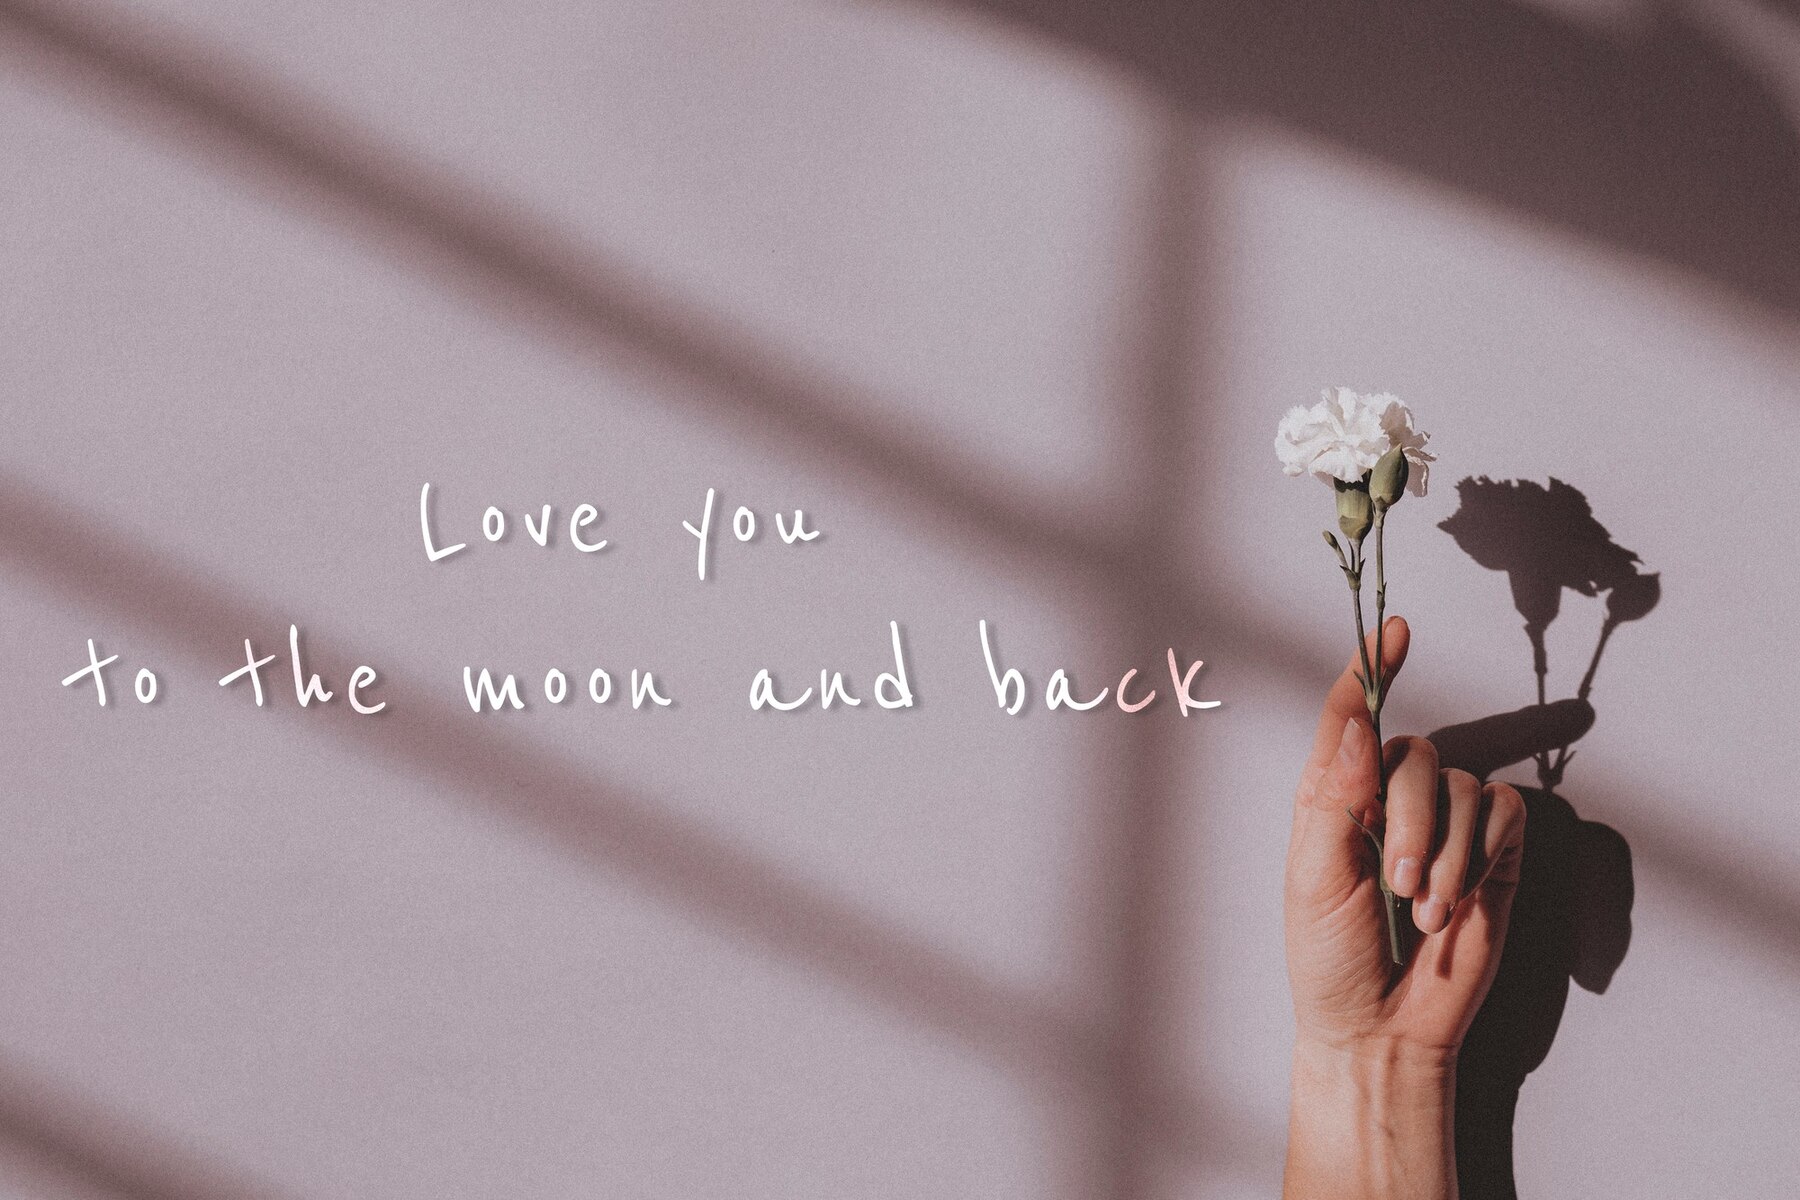 Romantic & Poetic Cute Sayings for Valentine